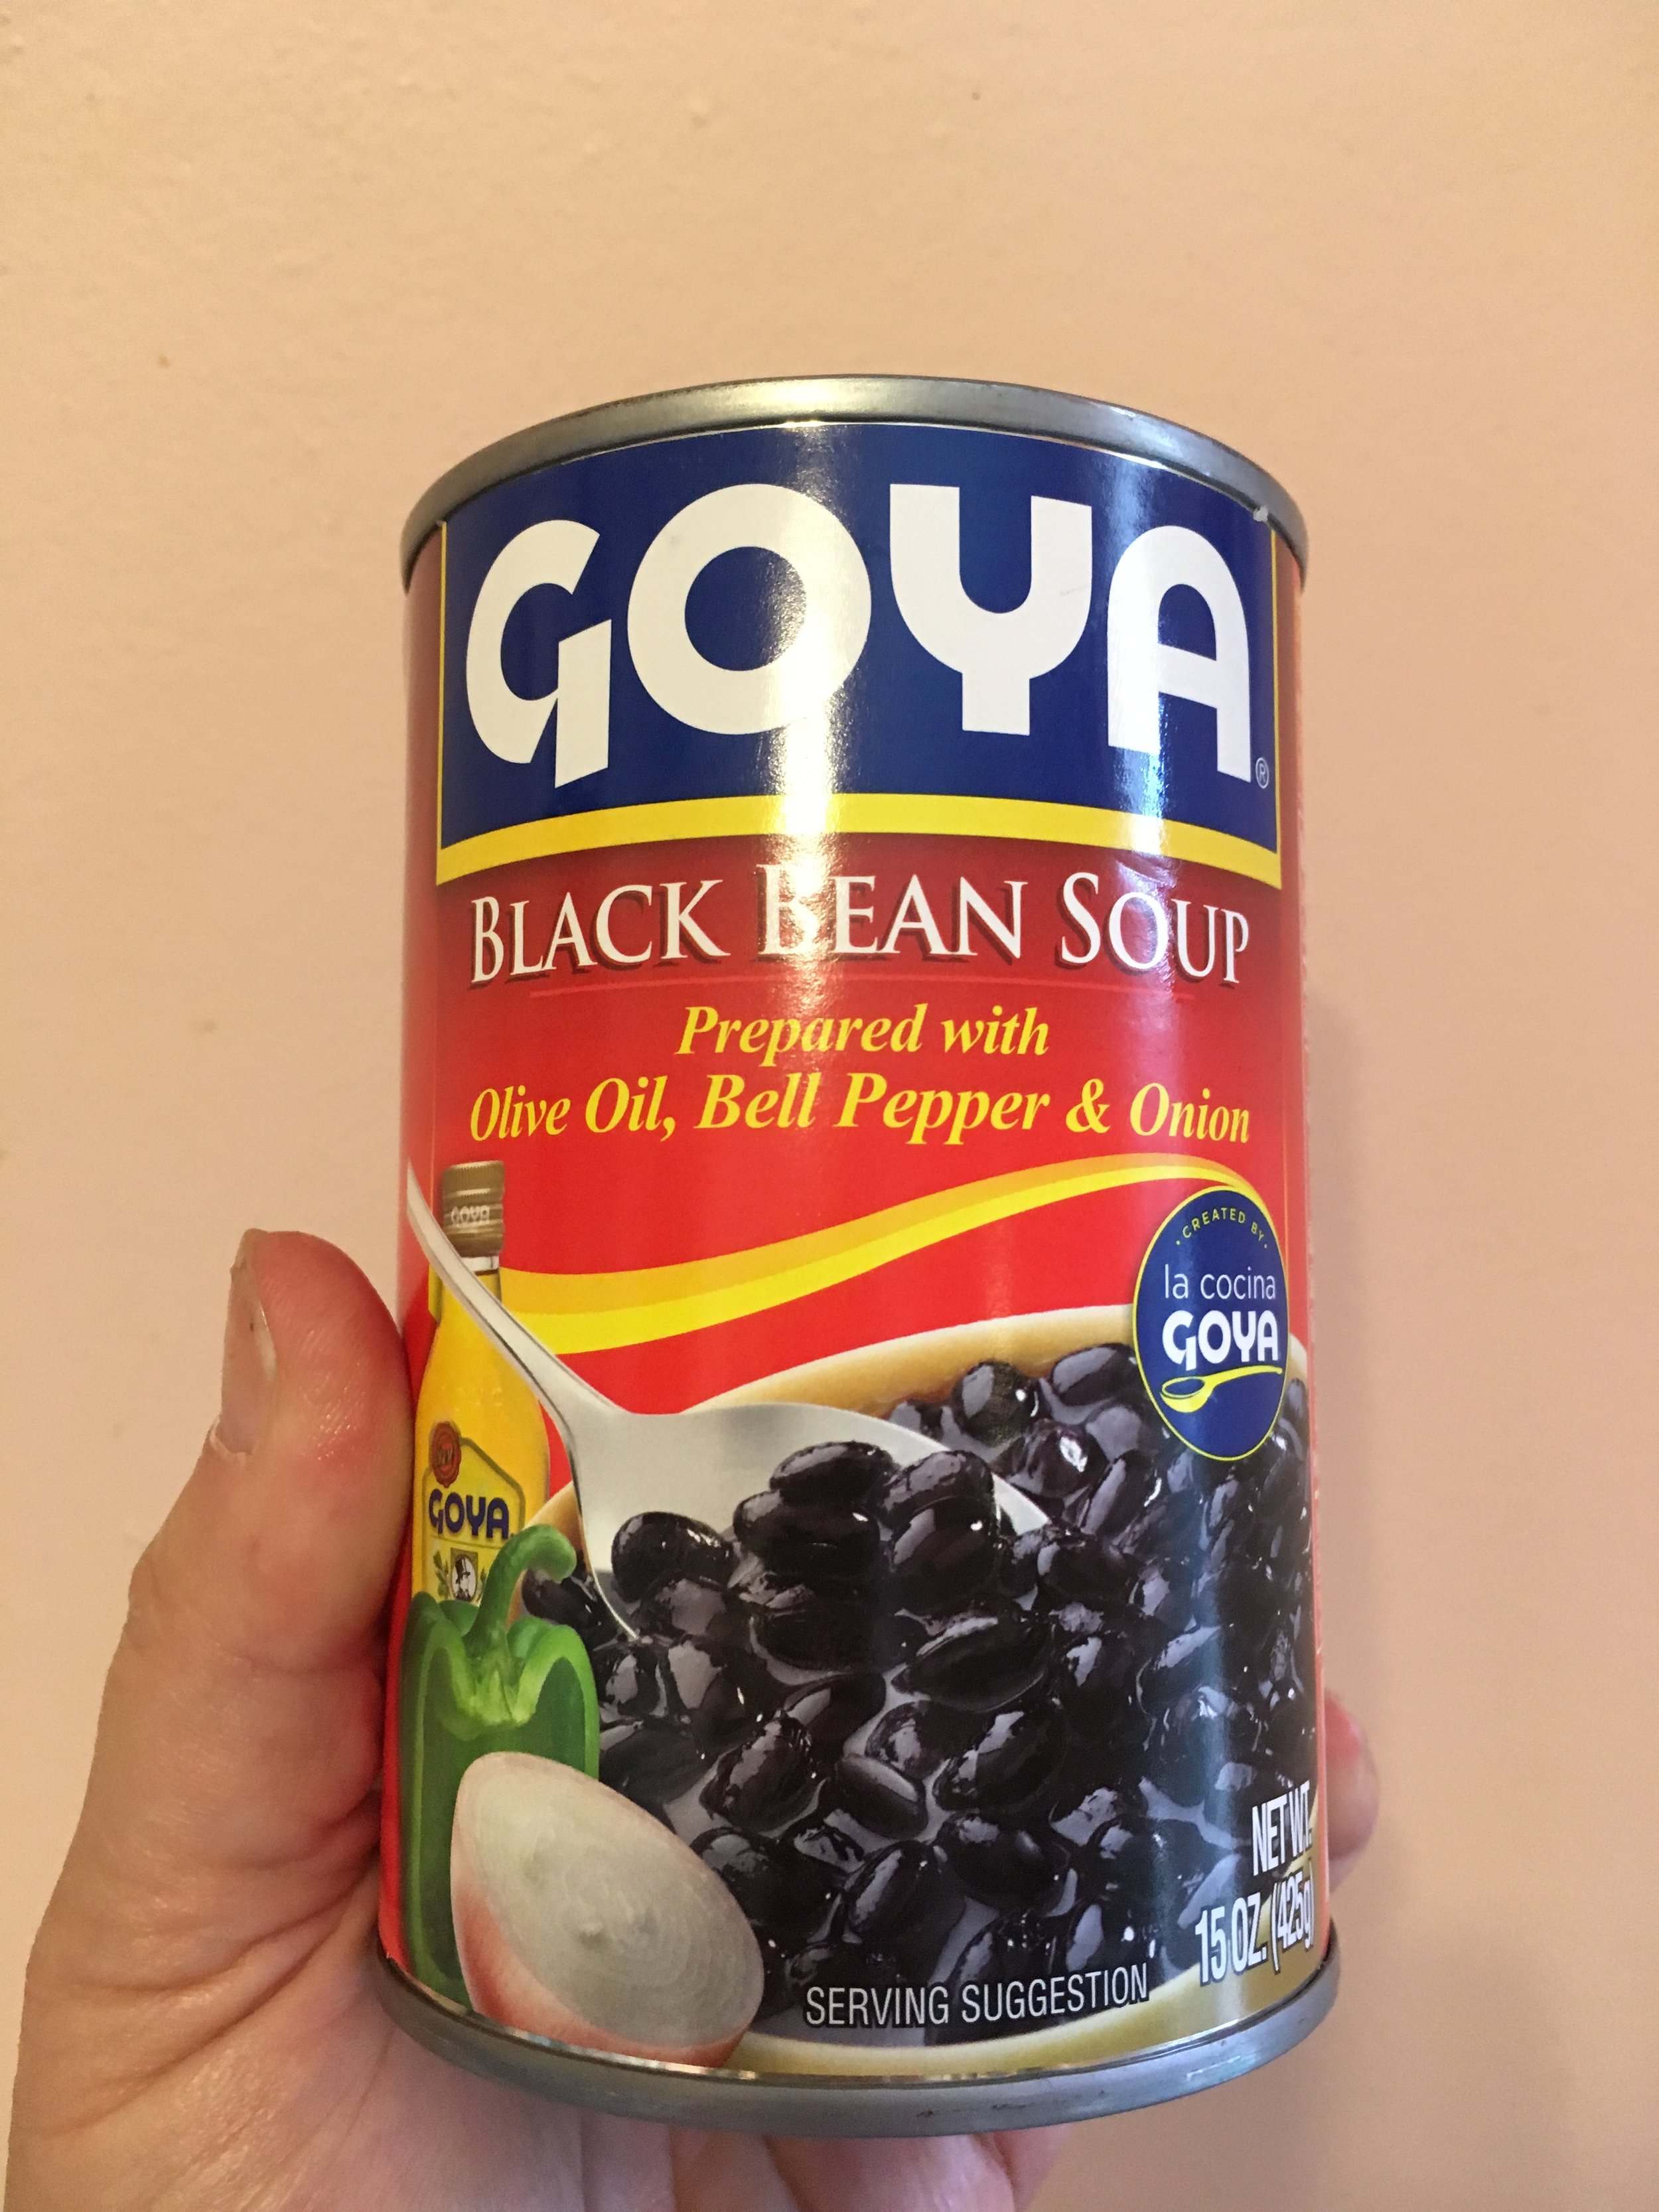 Tamales + rice + Goya black bean soup = satisfying lunch